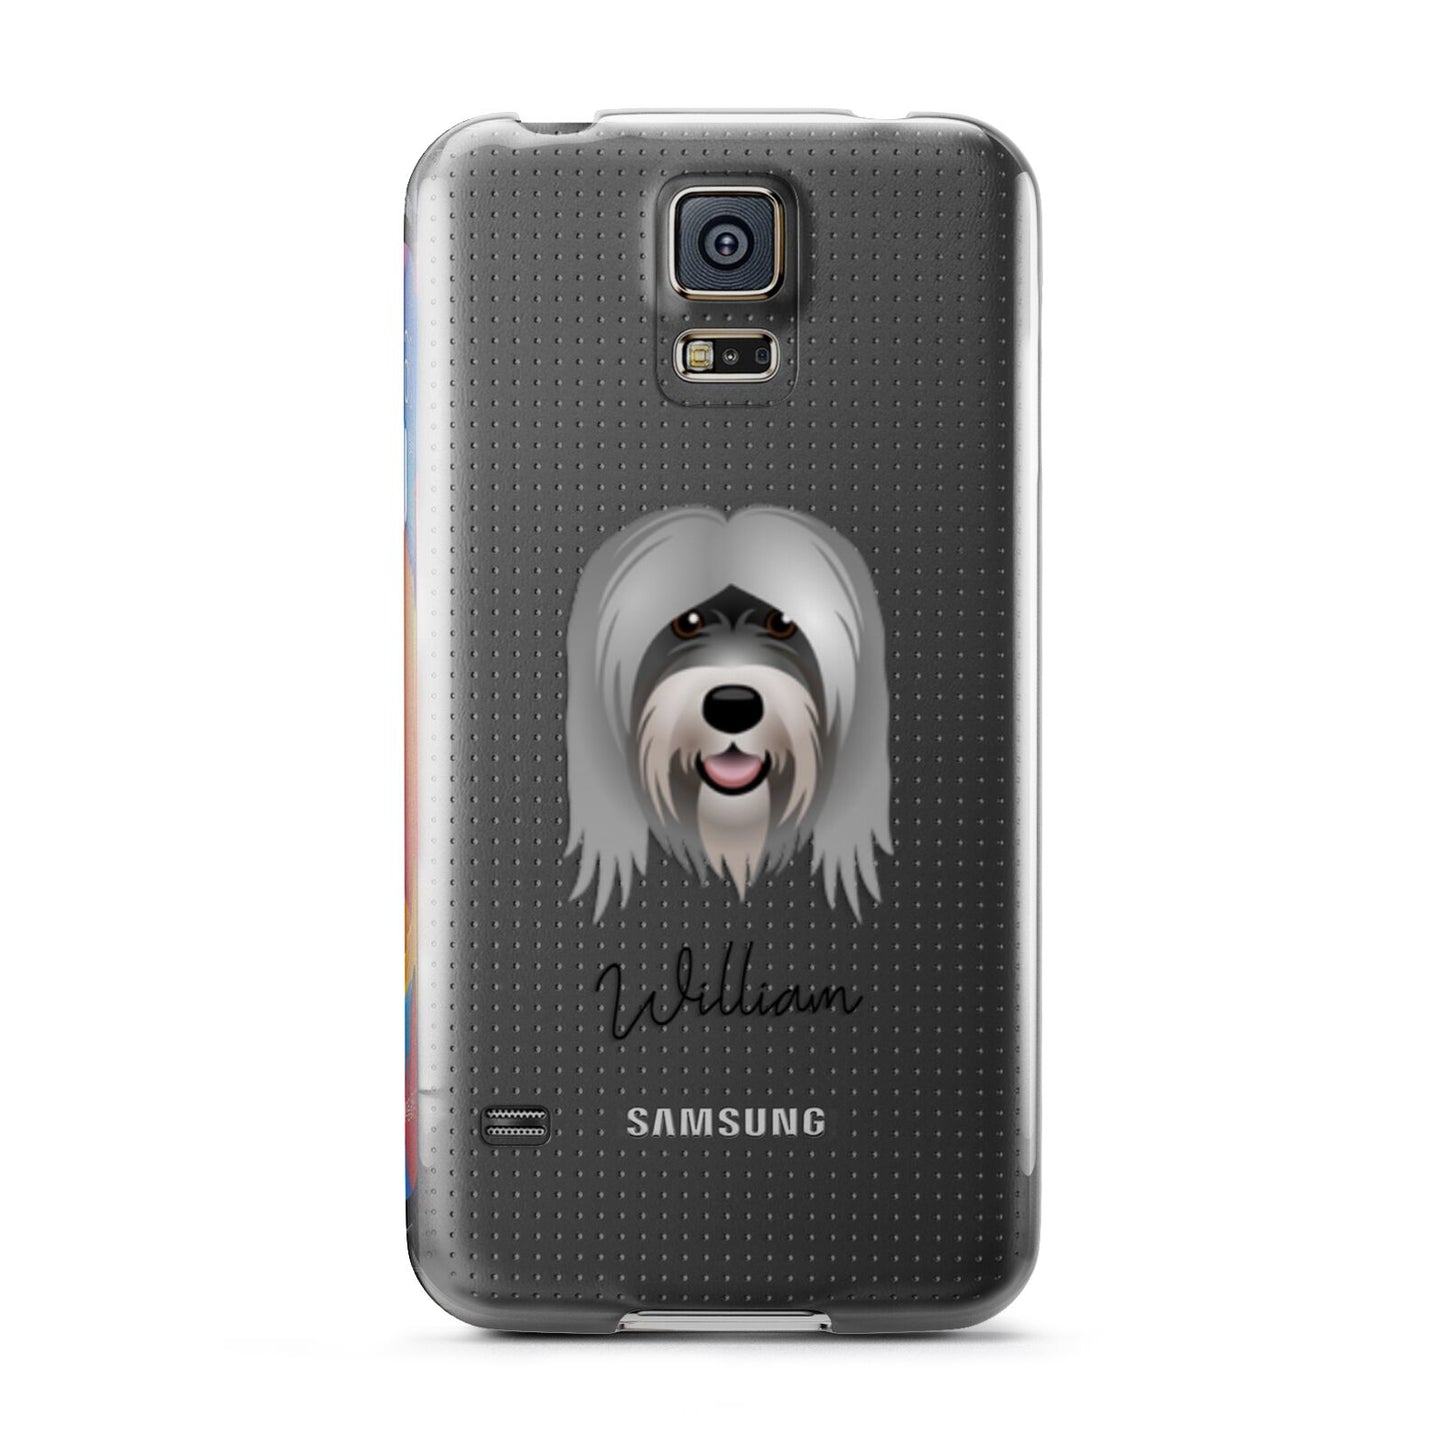 Tibetan Terrier Personalised Samsung Galaxy S5 Case